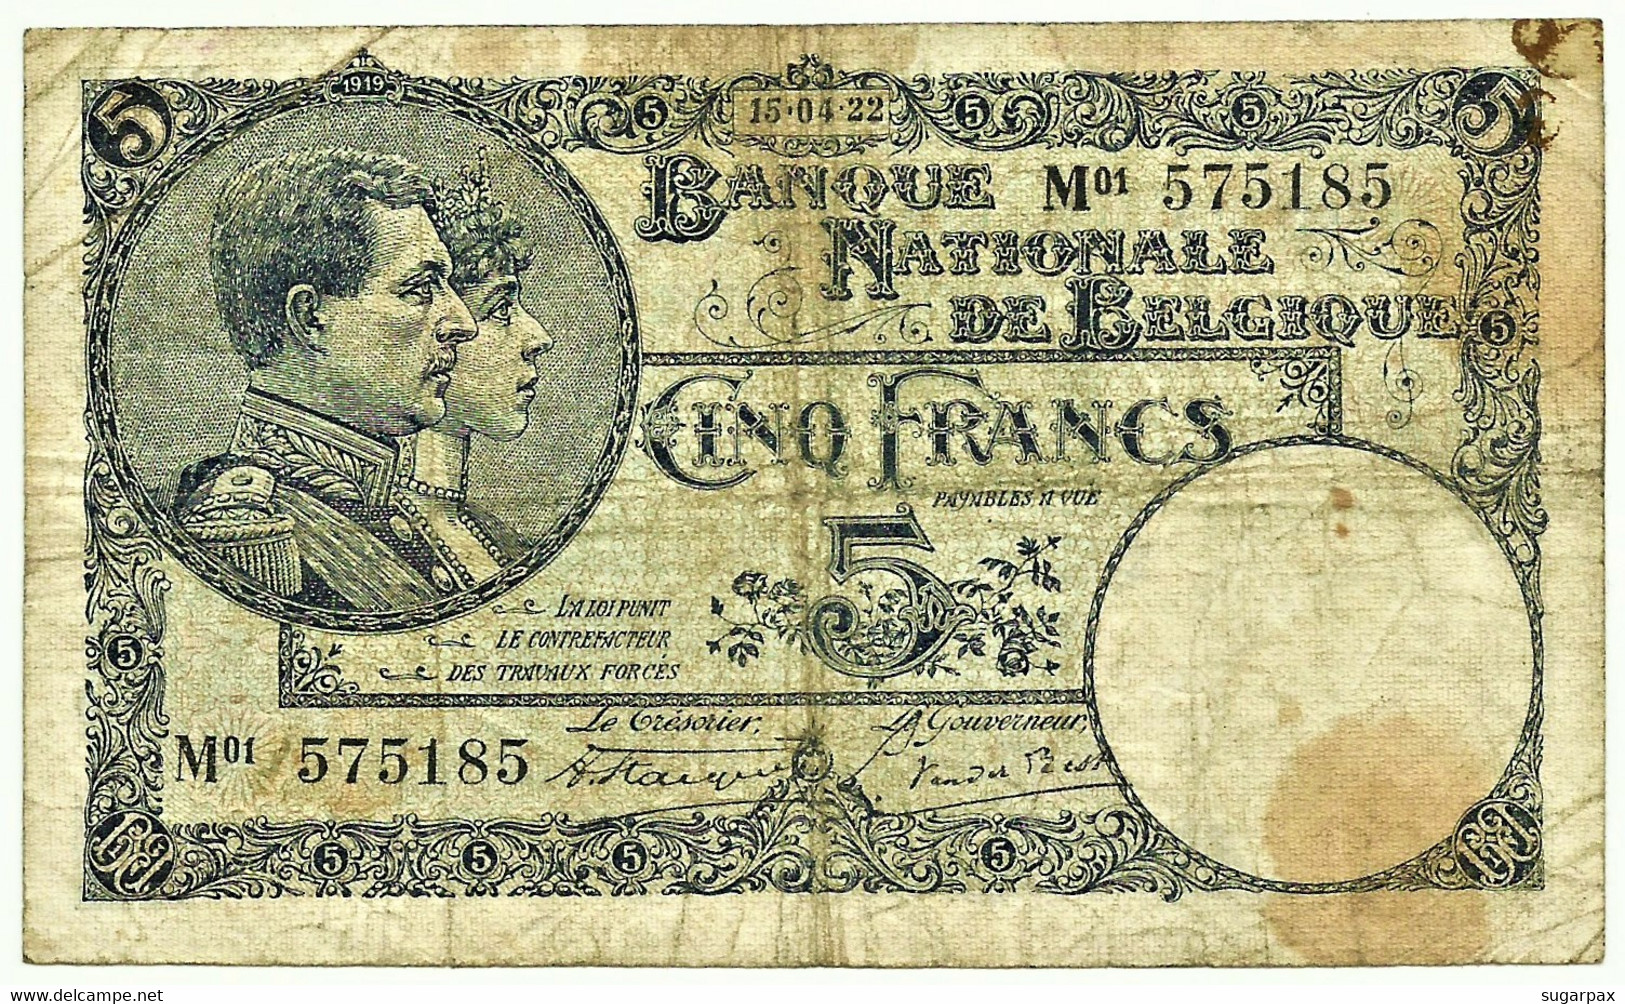 Belgium - 5 Francs - 15.04.1922 - Pick 93 - Serie M 01 - Belgie Belgique - 5 Franchi